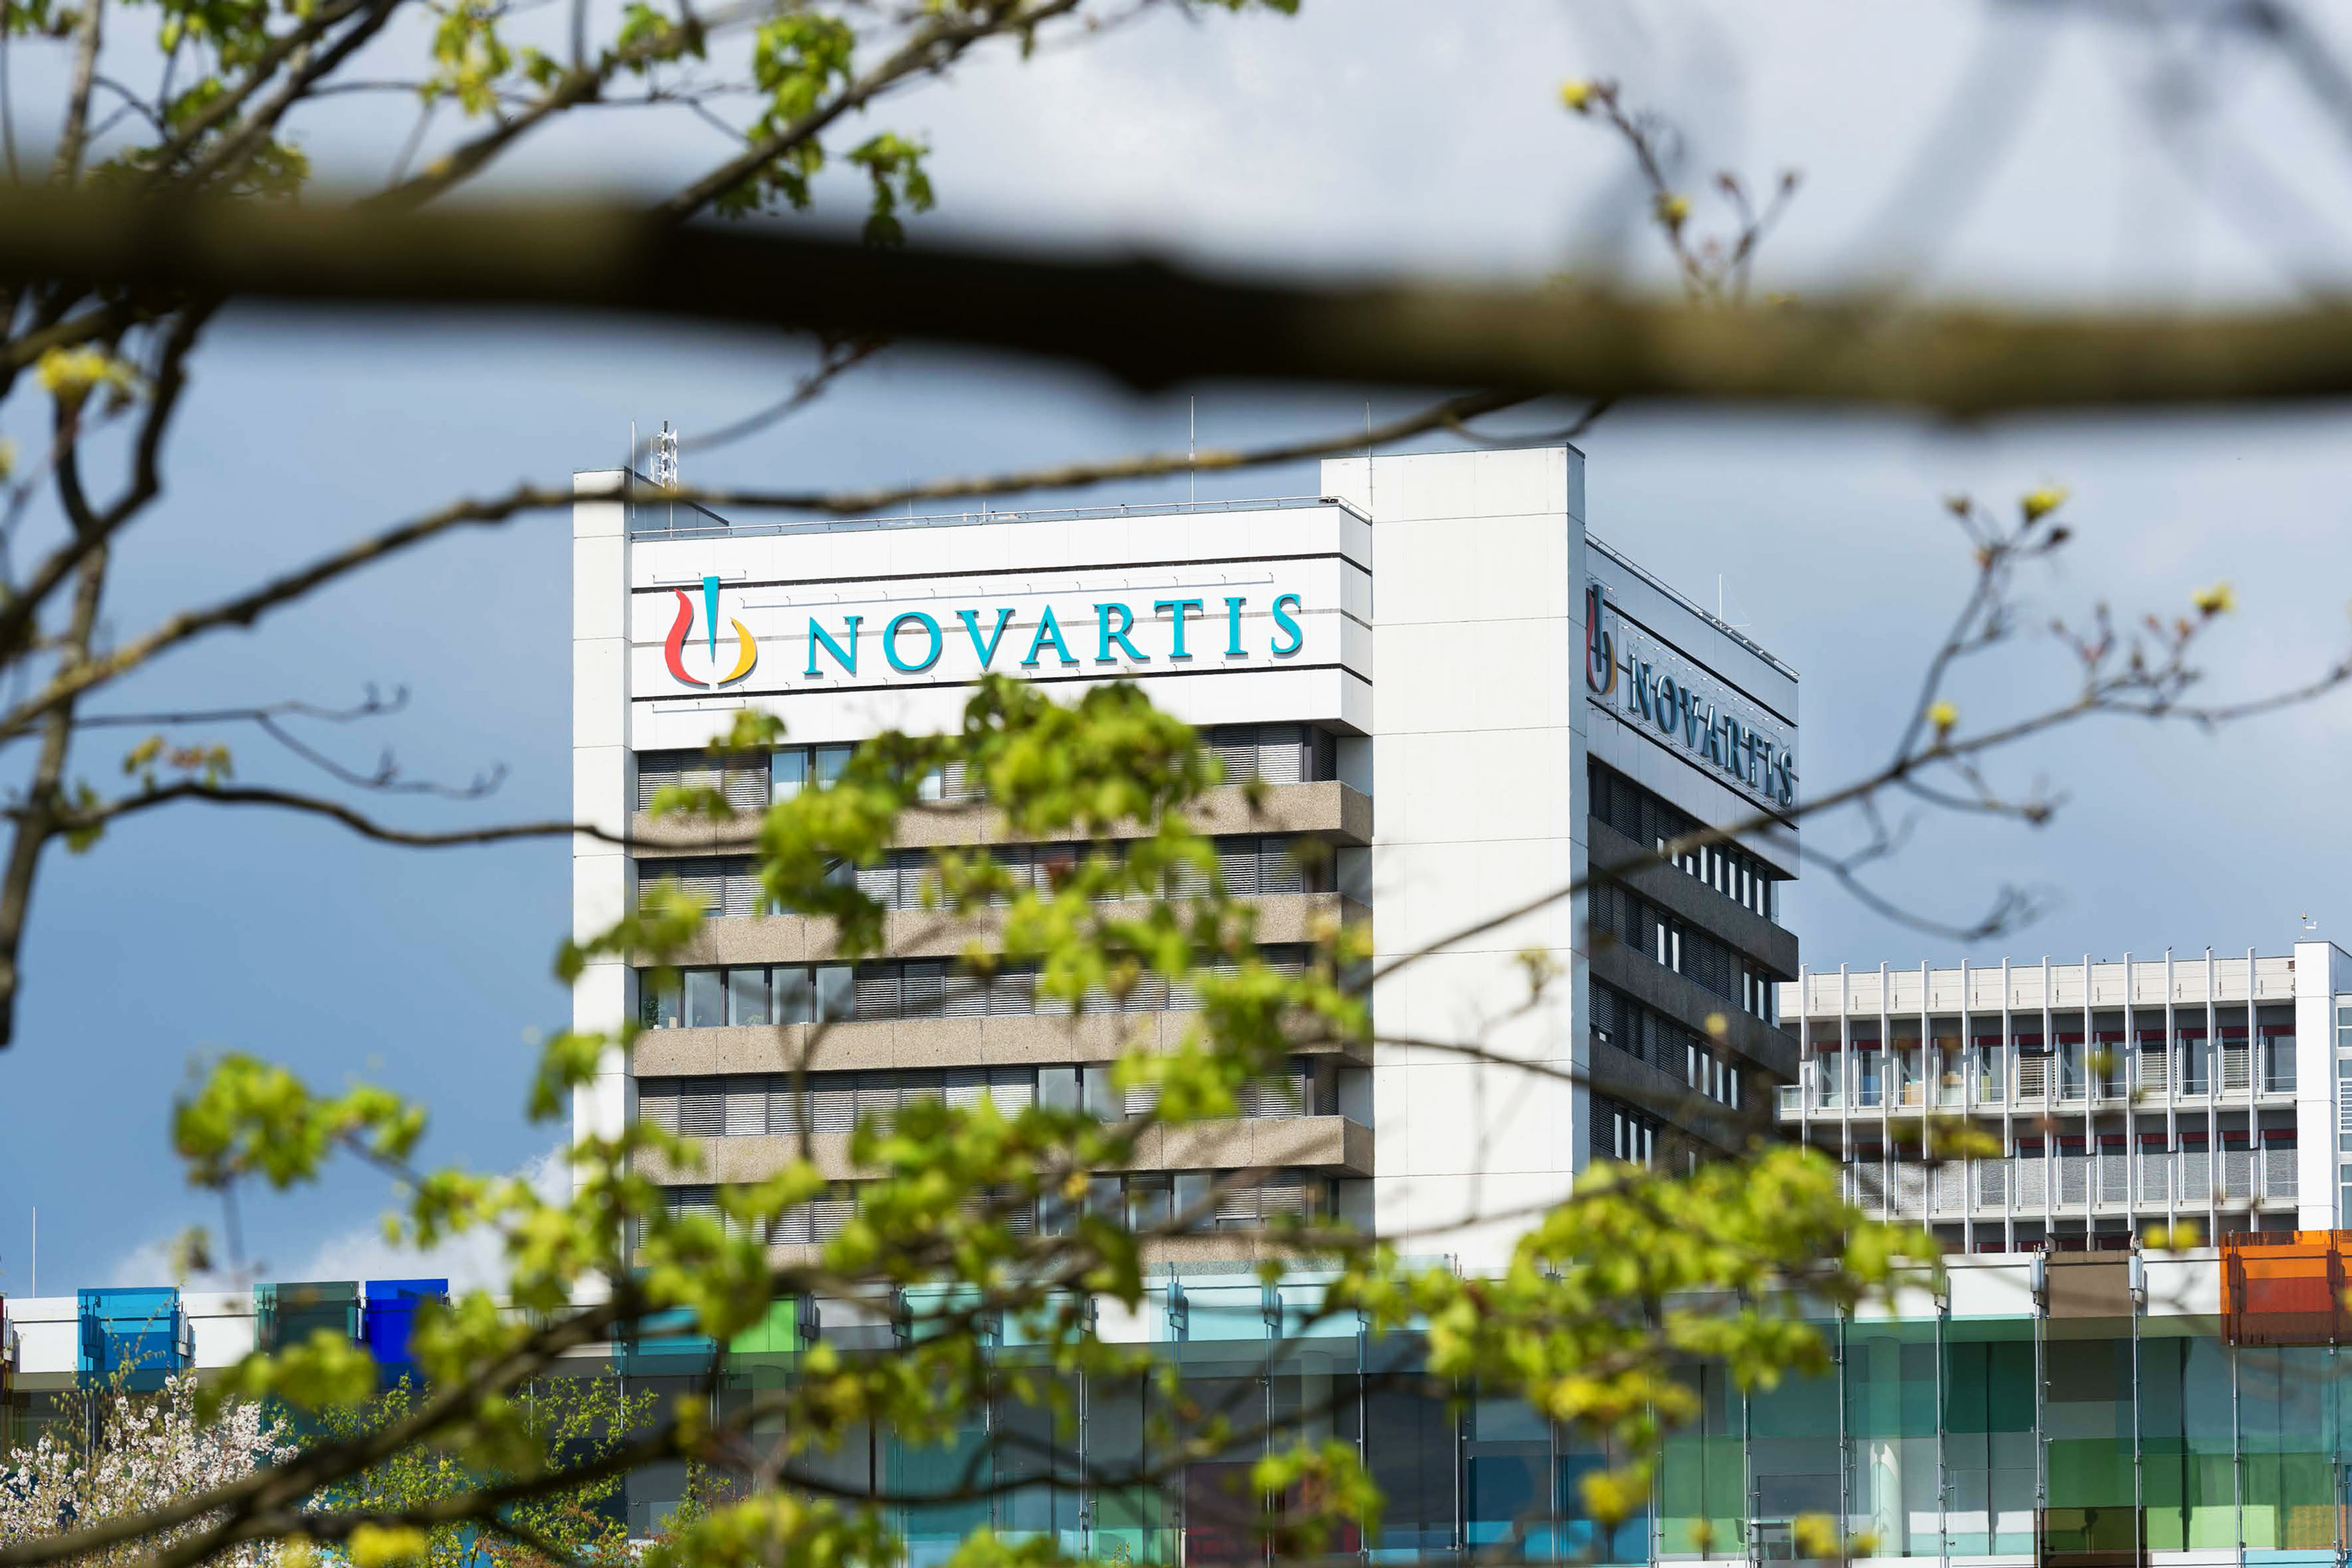 An image of a building with a Novartis logo